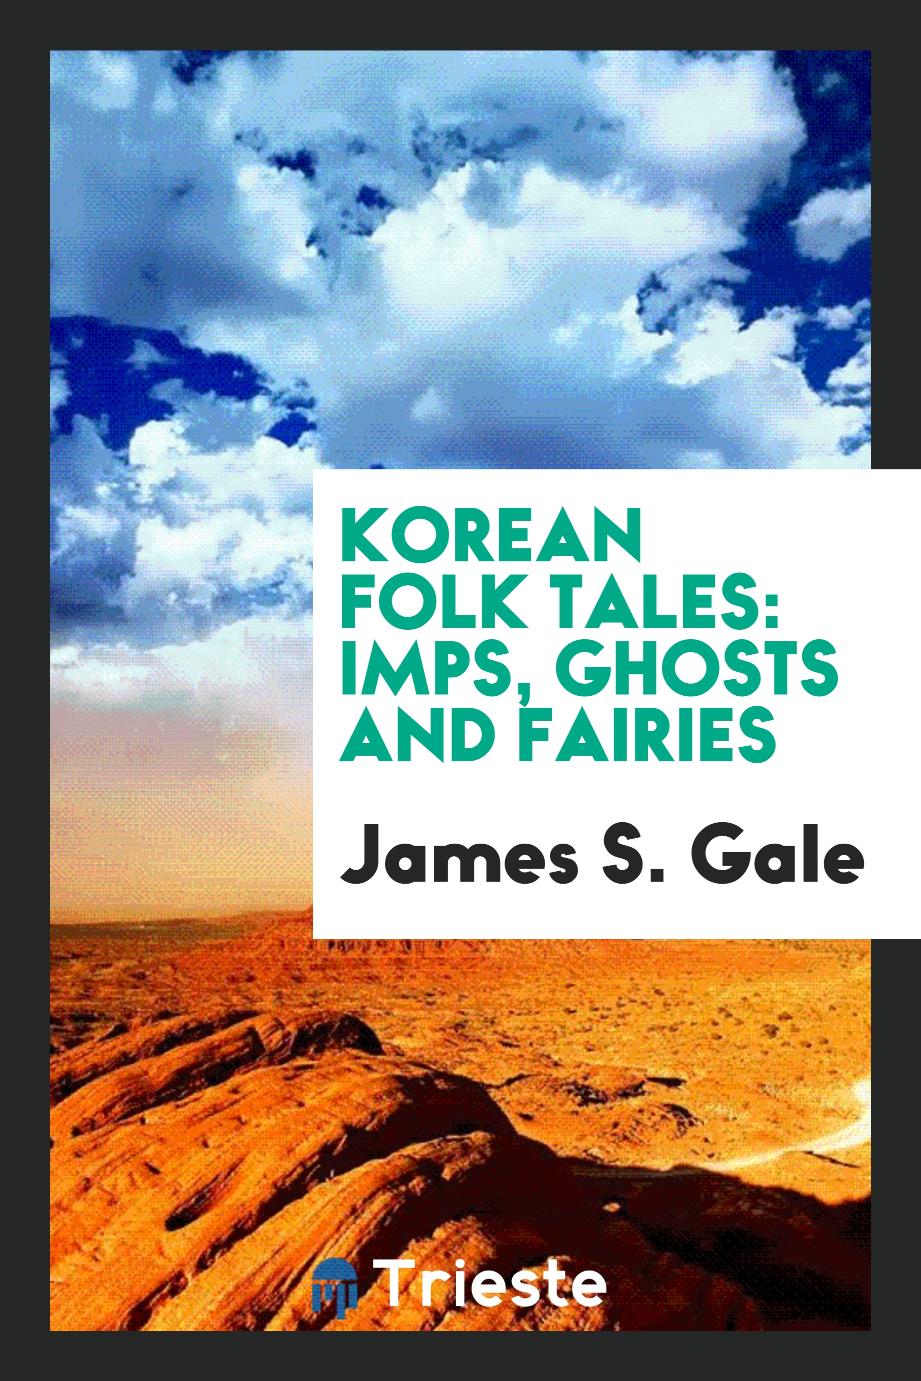 Korean folk tales: imps, ghosts and fairies